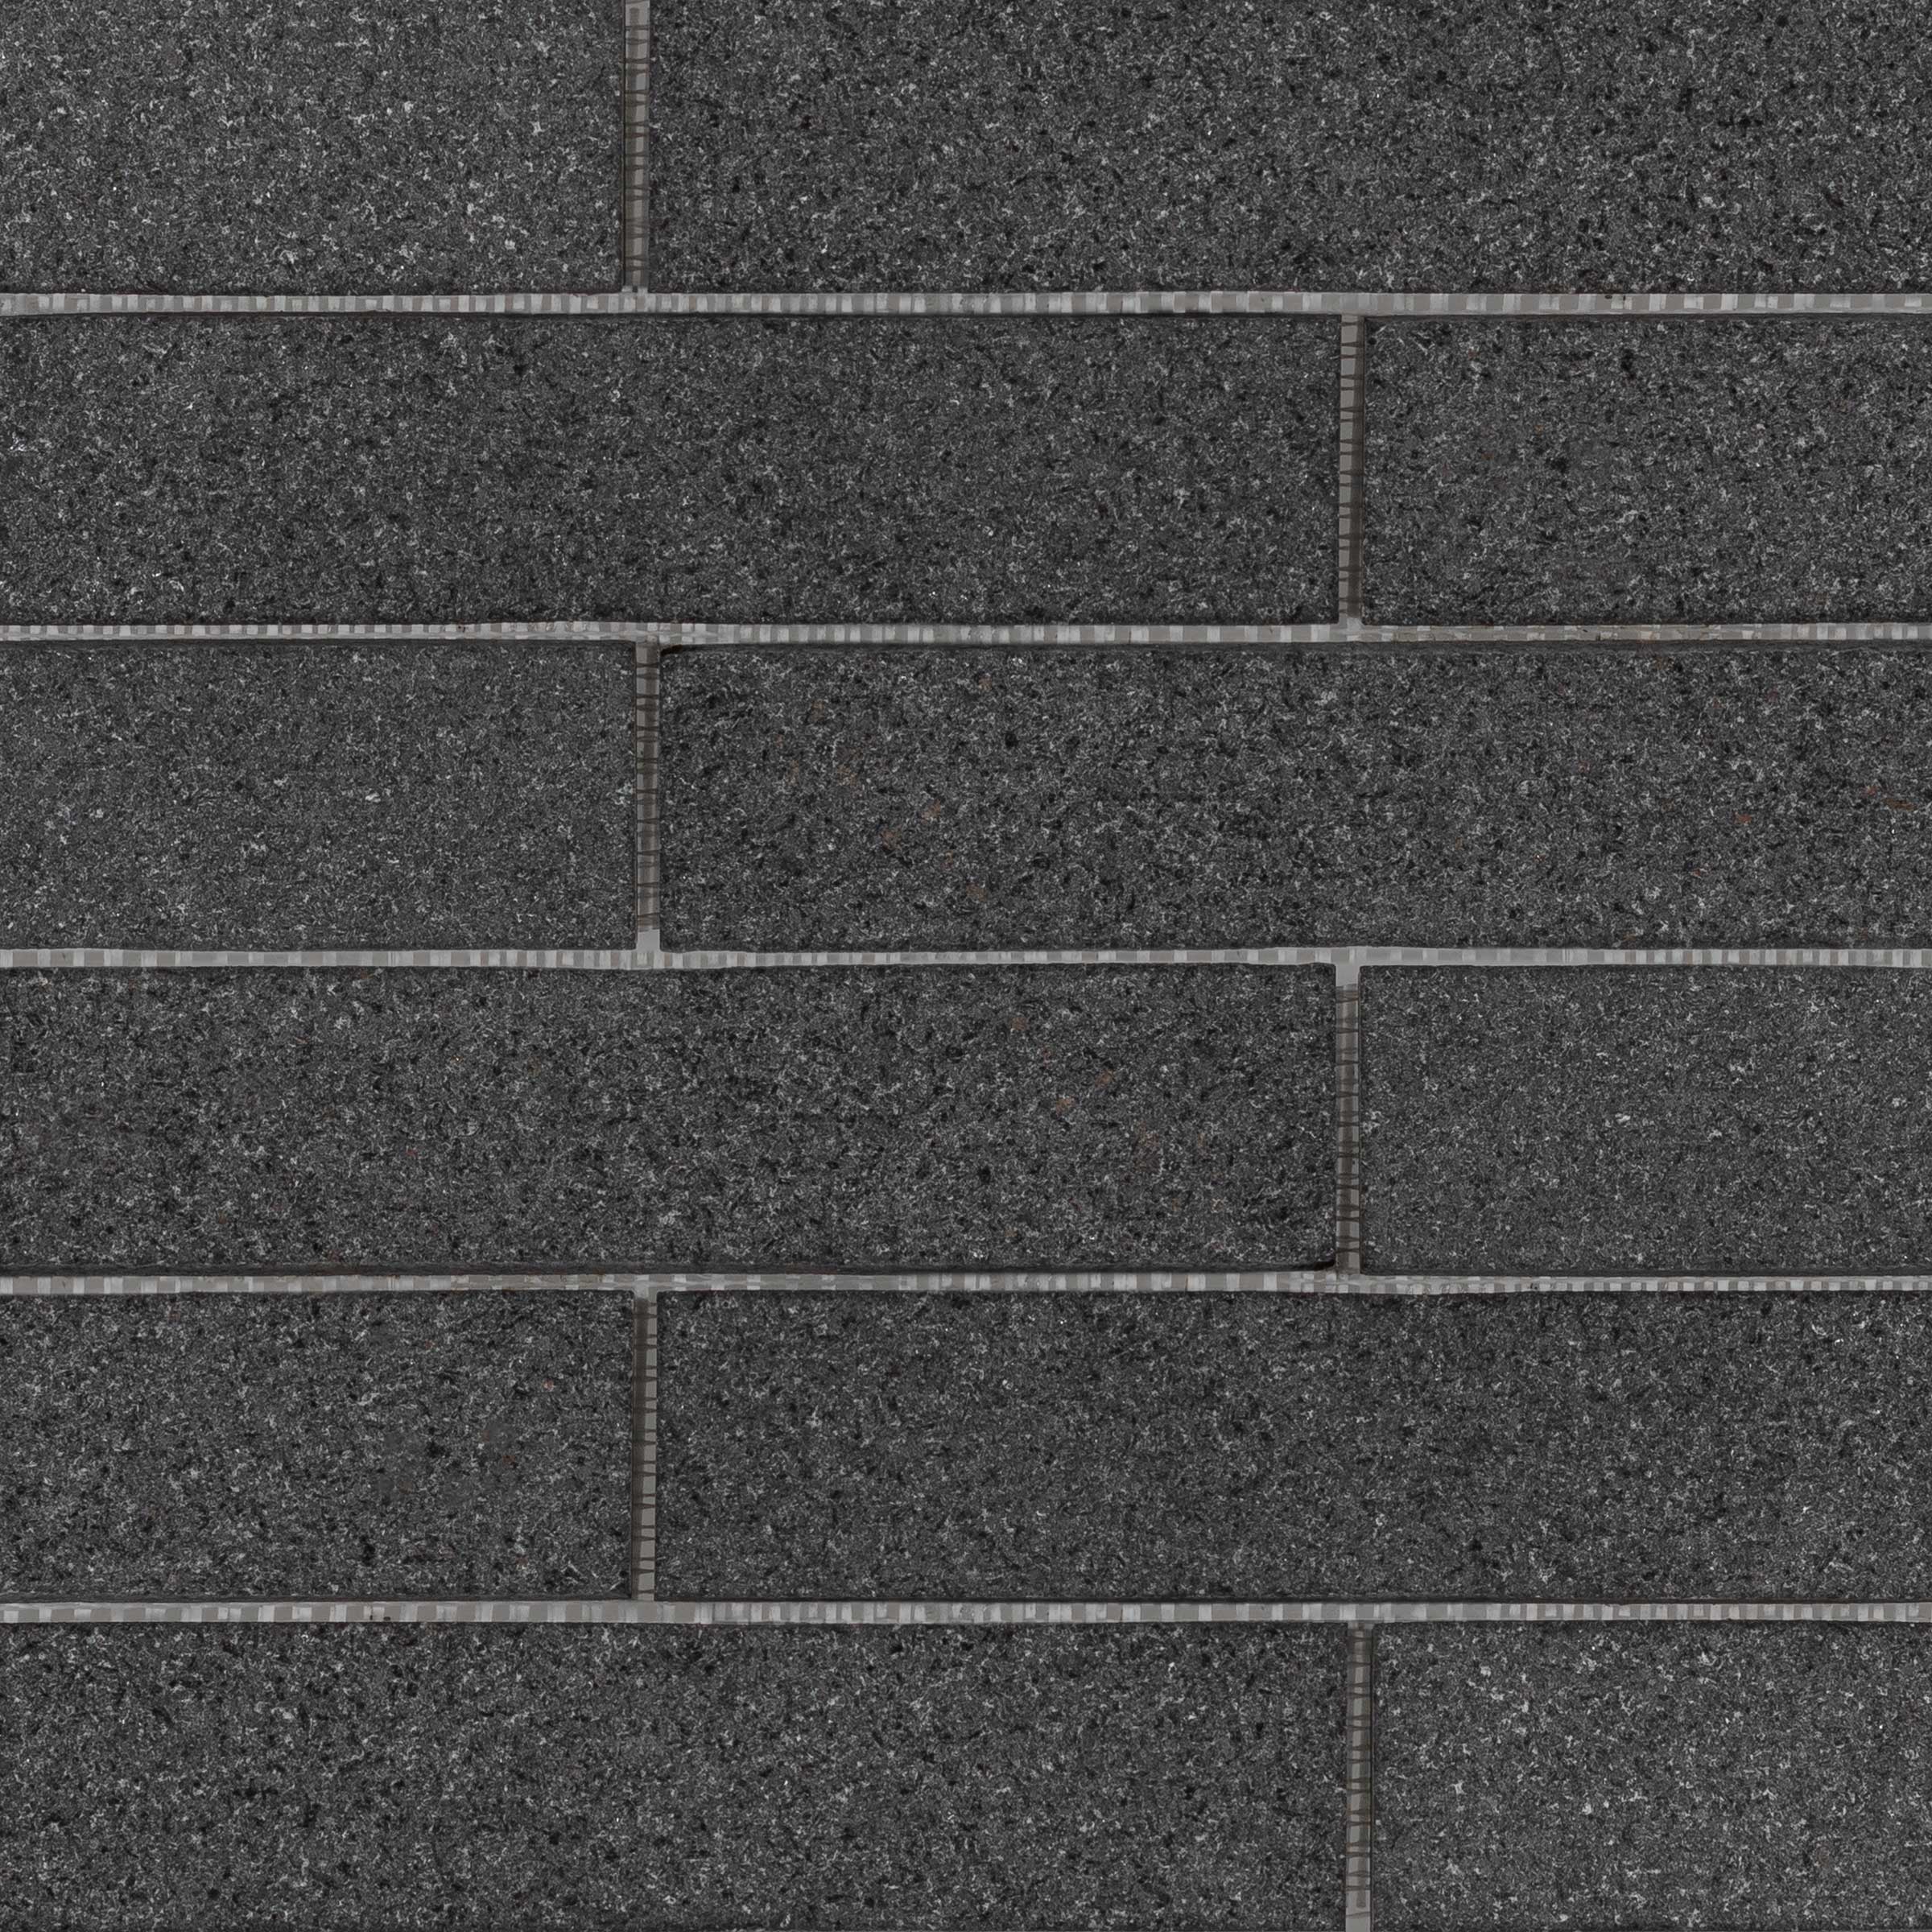 absolute black granite brick offset flamed black dark grey 2x8x3_8 surface group natural stone resource